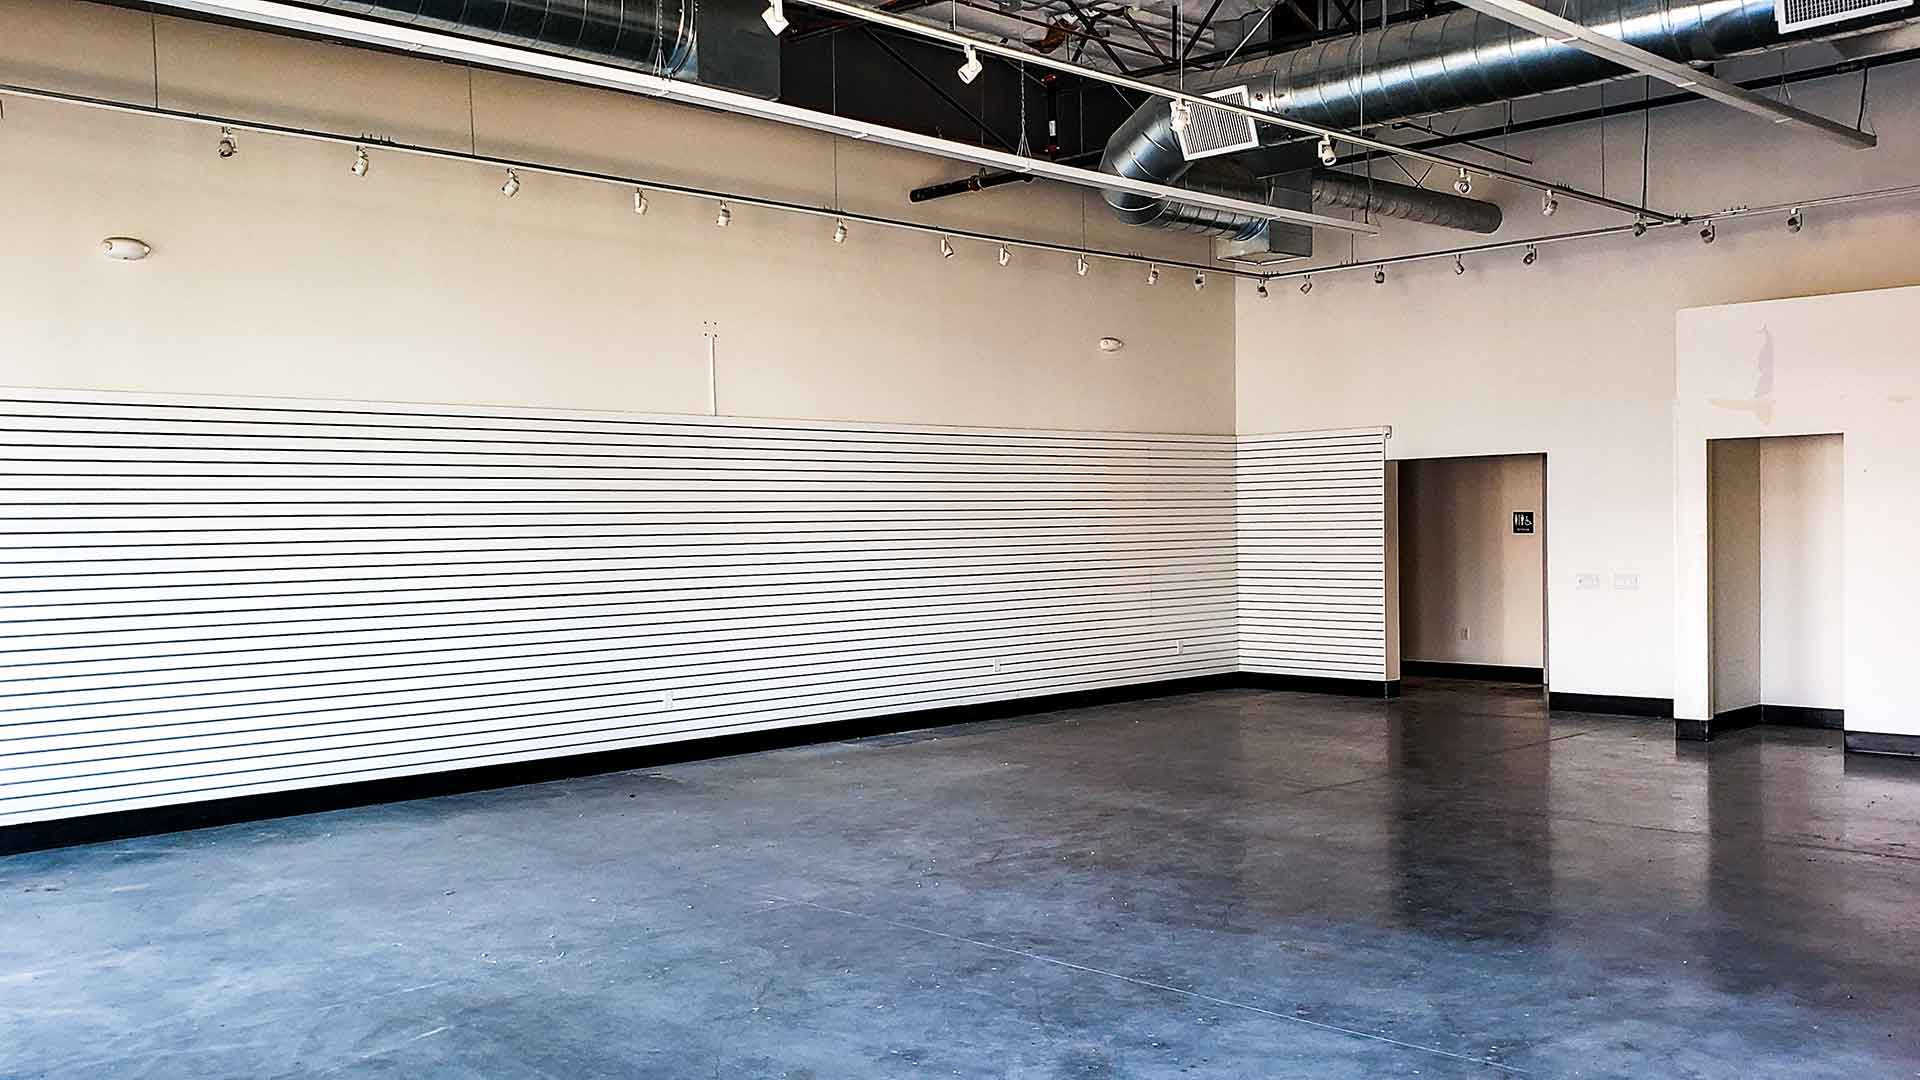 Cement Floors, Retail Wall Hangar Board, & Open Ceiling